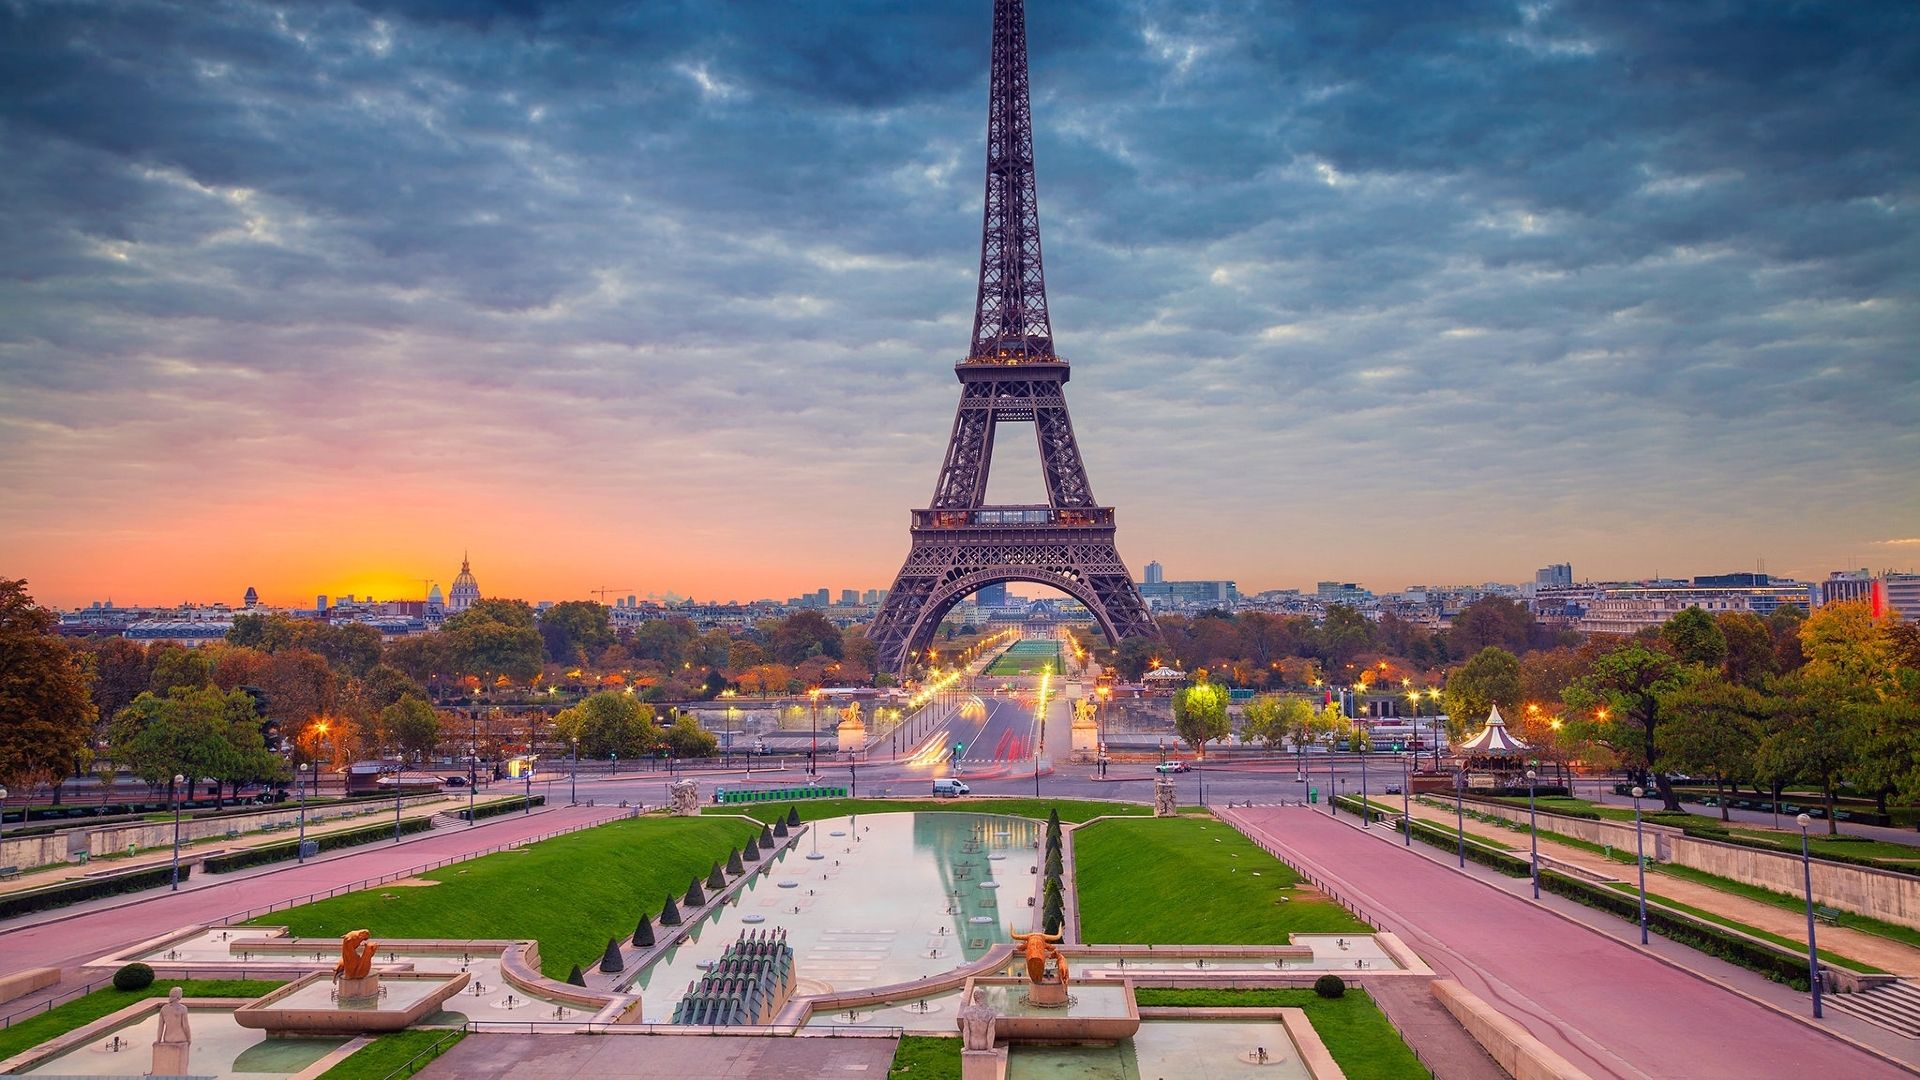 Eiffel Tower Paris Beautiful View 1080P Laptop Full HD Wallpaper, HD City 4K Wallpaper, Image, Photo and Background